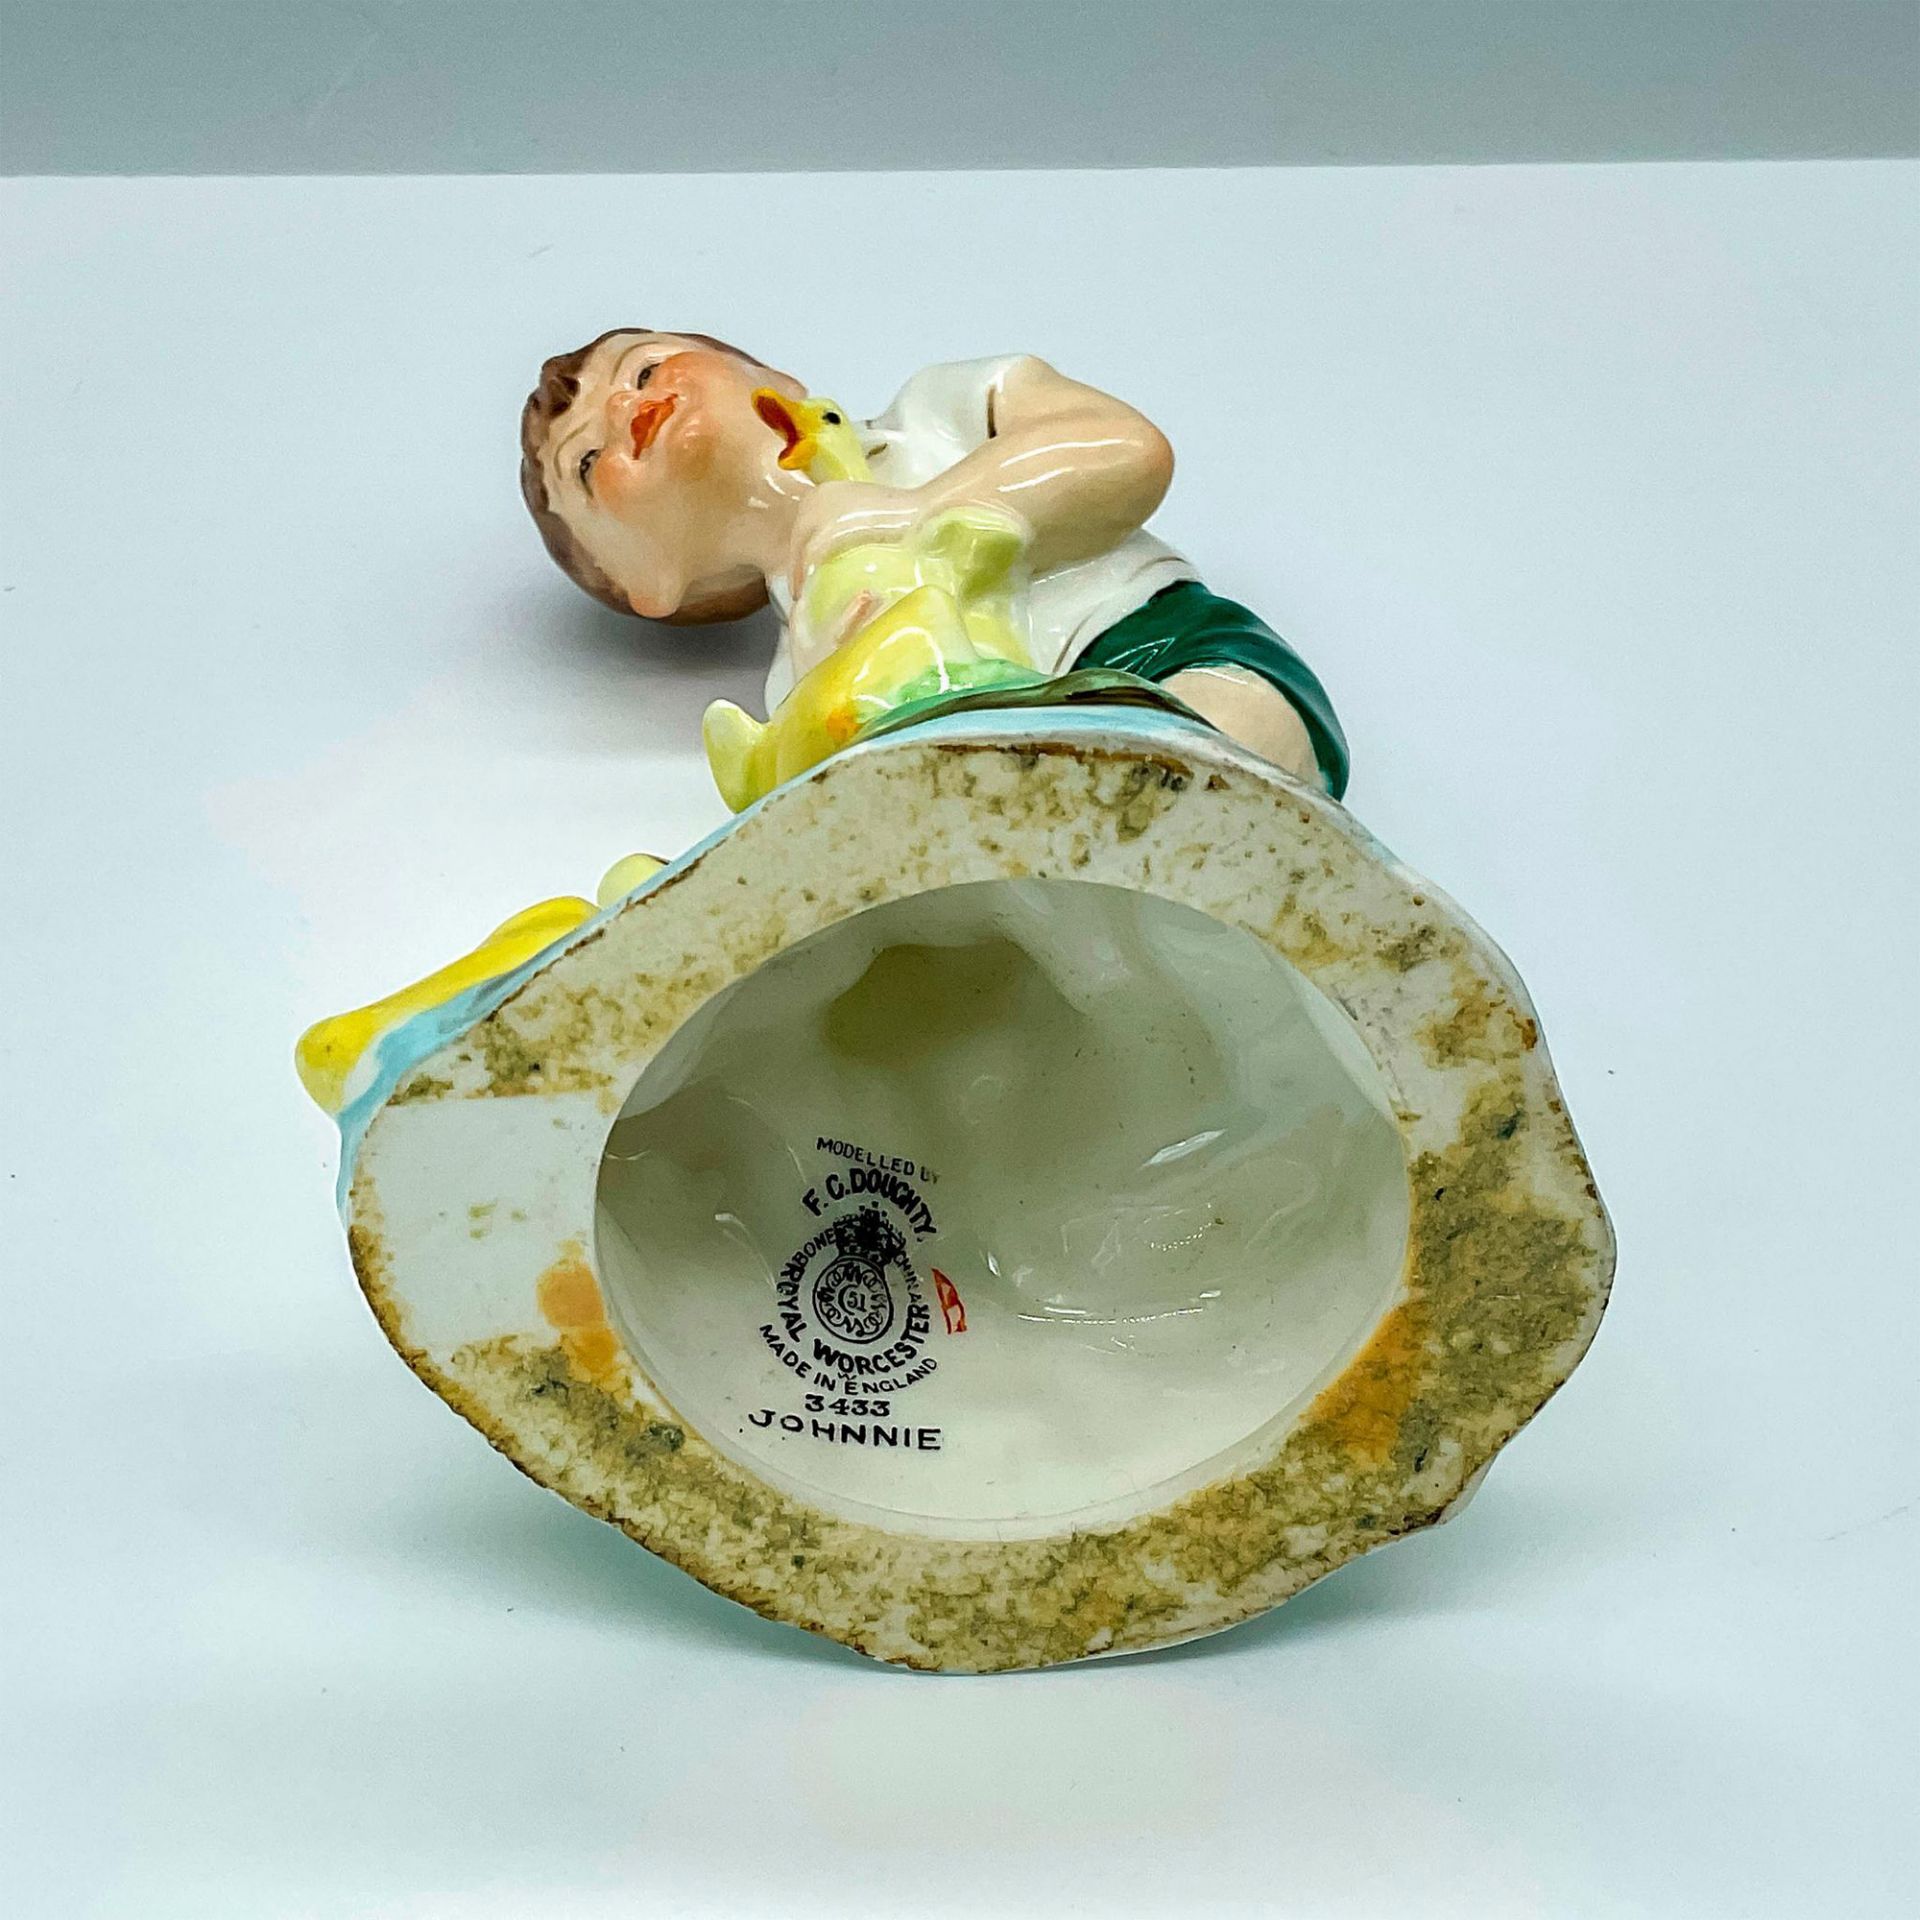 Royal Worcester Porcelain Figurine, Johnnie RW3433 - Image 4 of 4